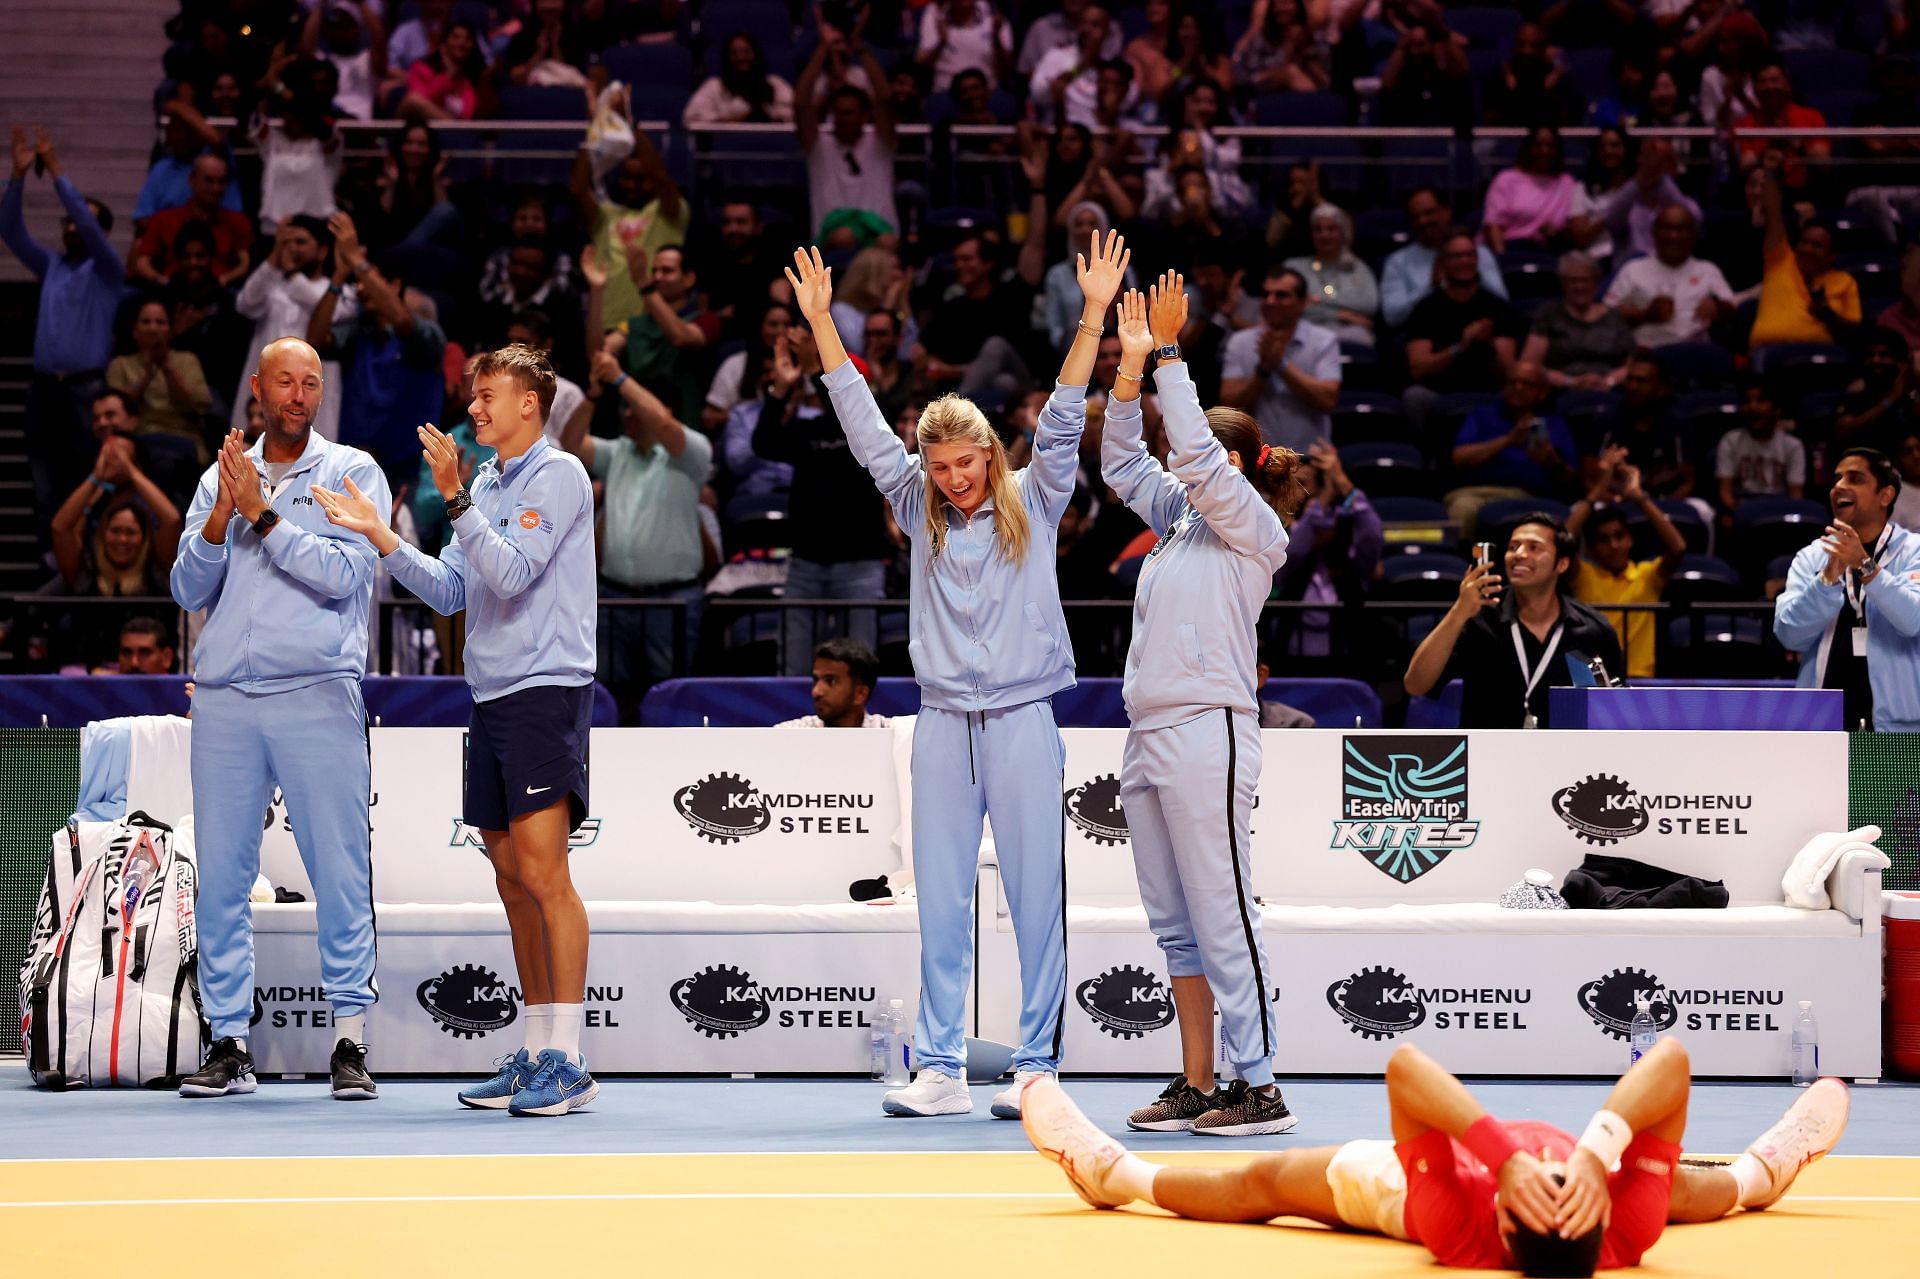 Eugenie Bouchard celebrates at the World Tennis League as Novak Djokovic competes for a point